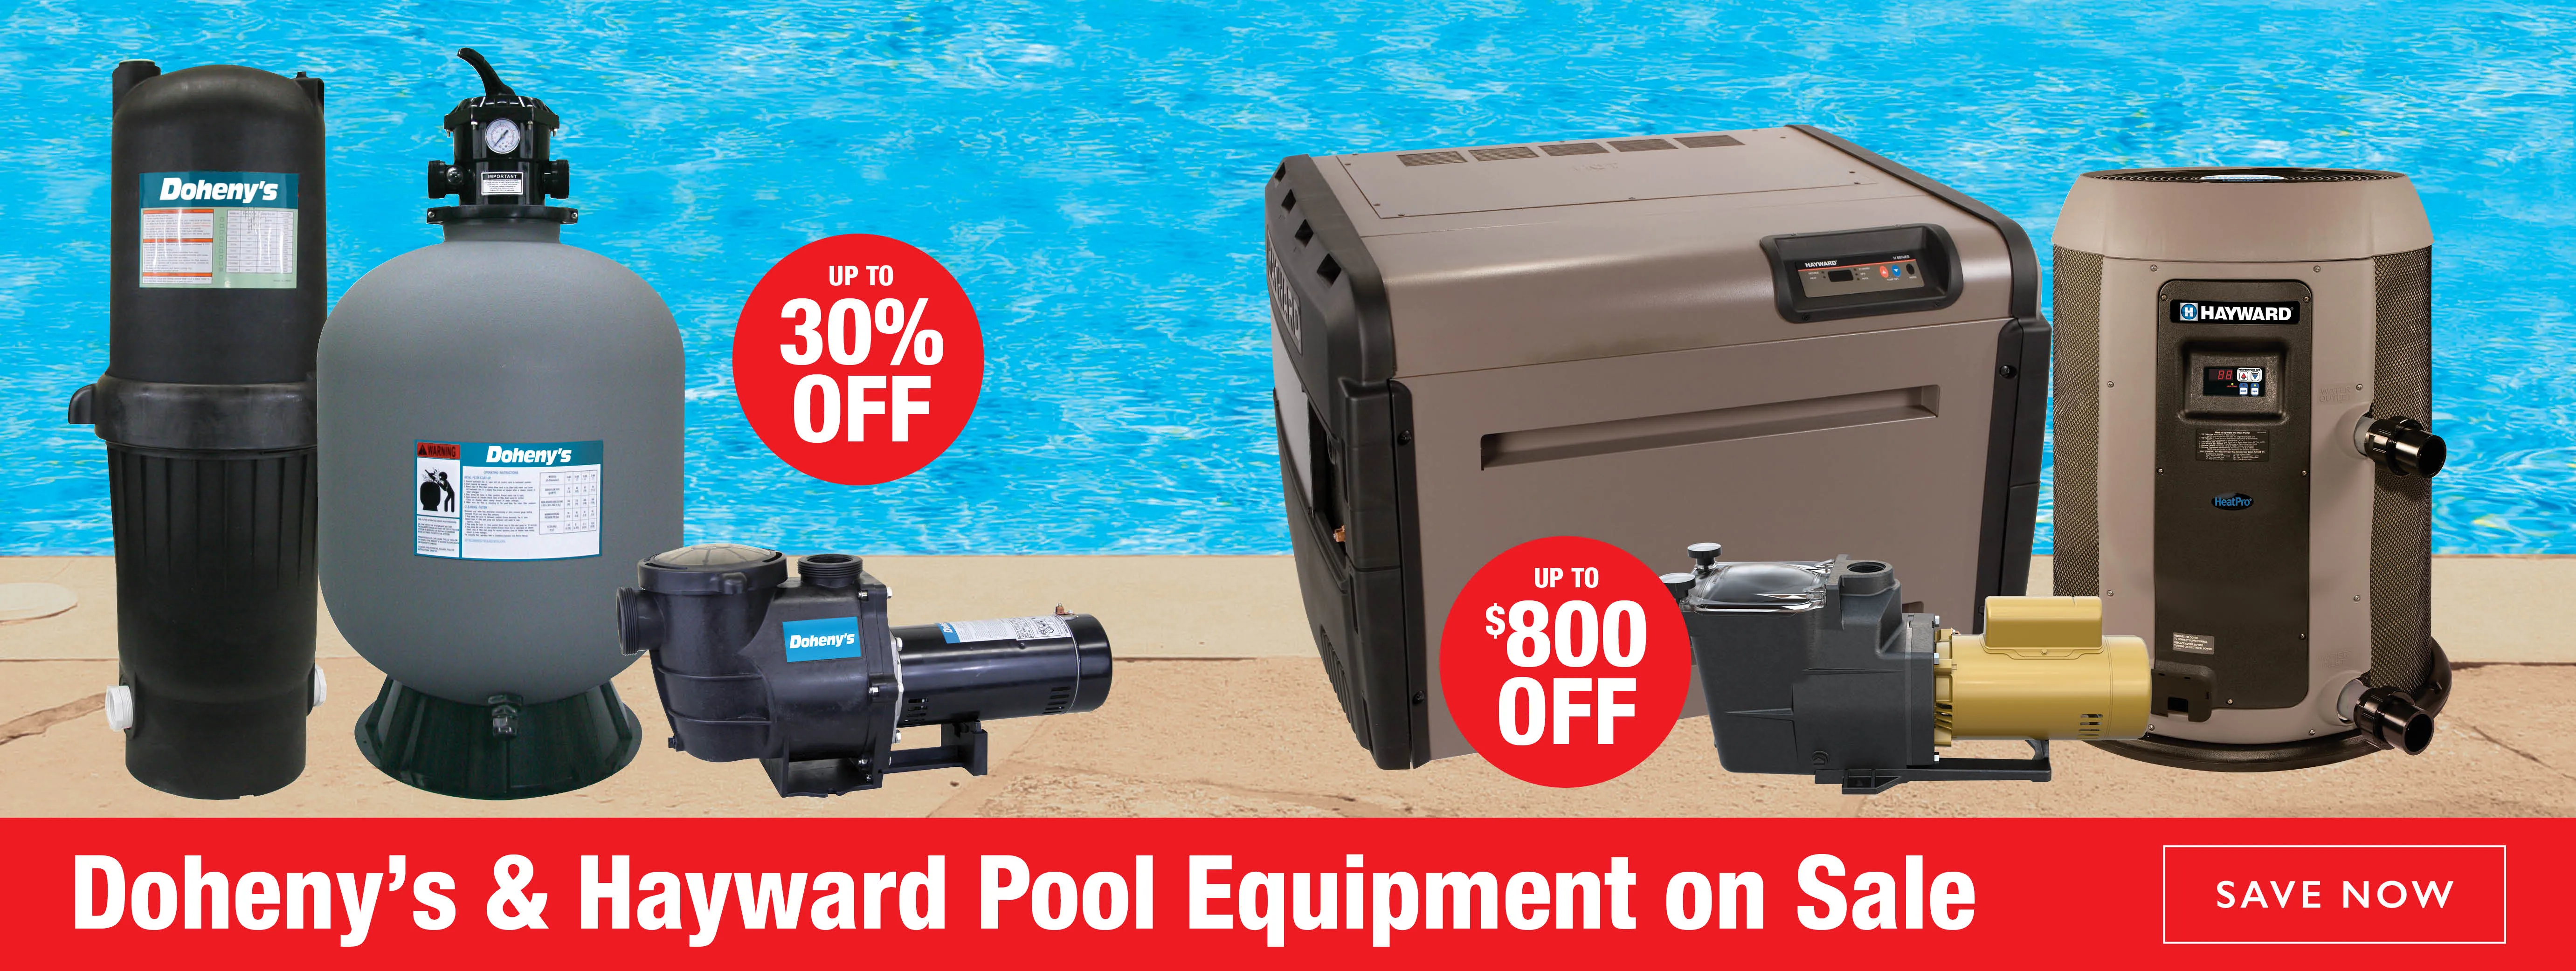 Save on Doheny & Hayward Pool Equipment